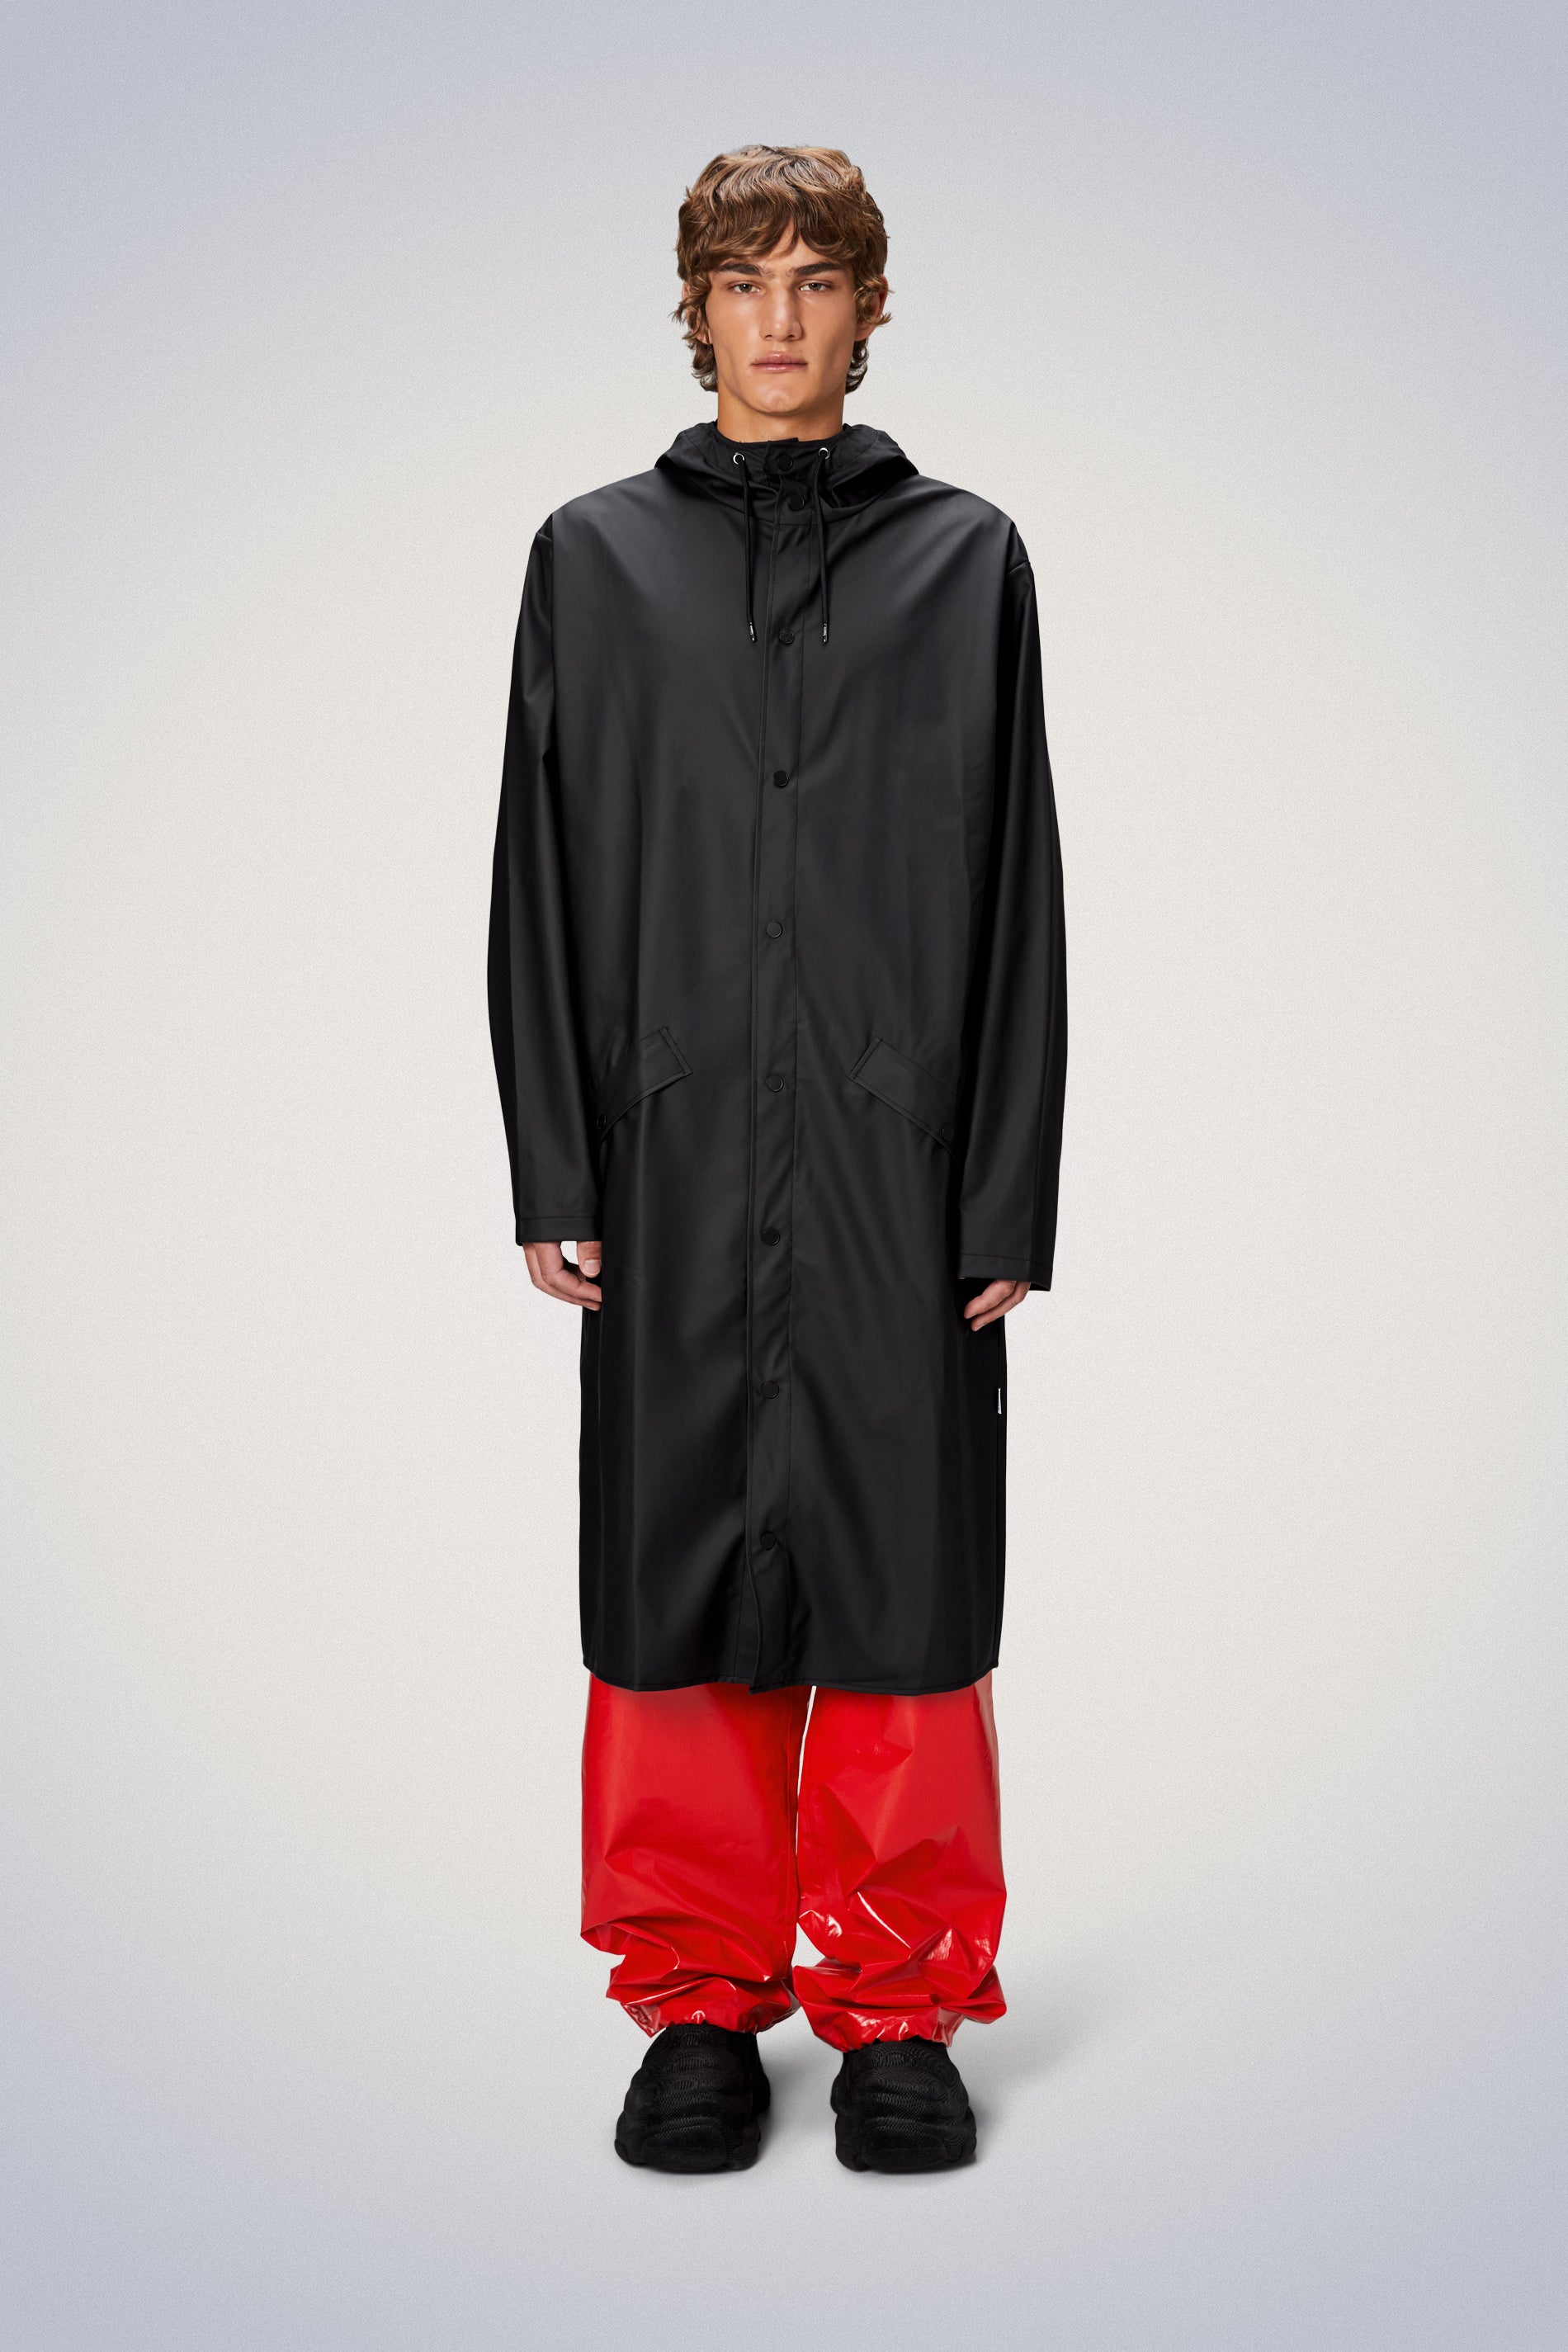 Rain Gear for Men  Buy Rainwear & Outfits for Men from Rains®